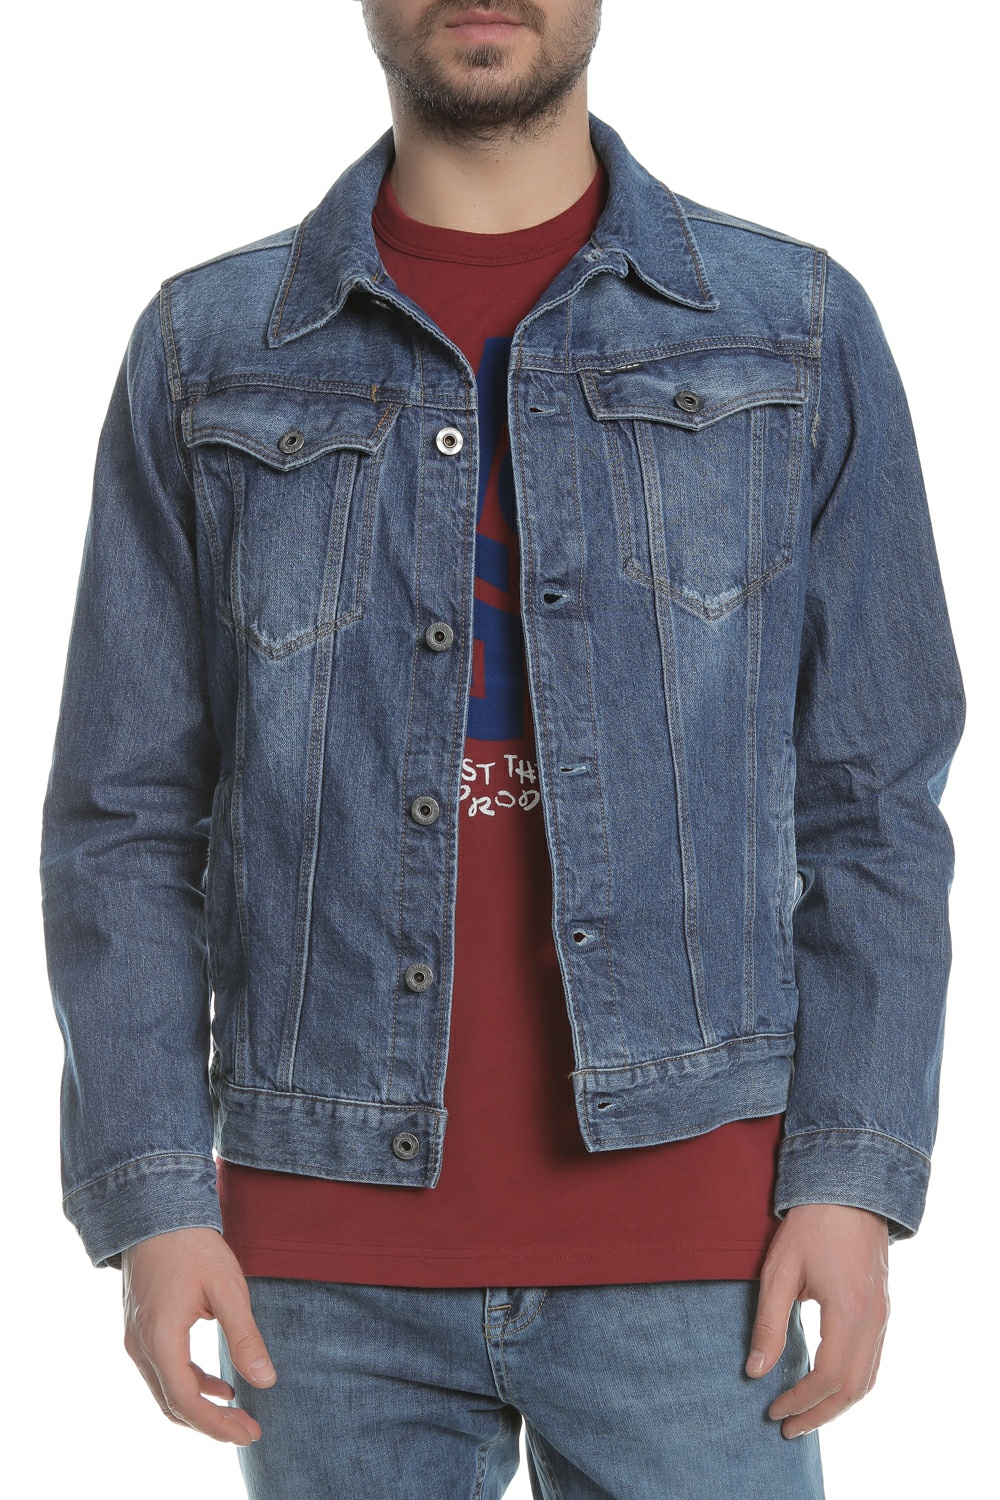 G-STAR RAW - Ανδρικό jean jacket G-STAR RAW μπλε Ανδρικά/Ρούχα/Πανωφόρια/Τζάκετς